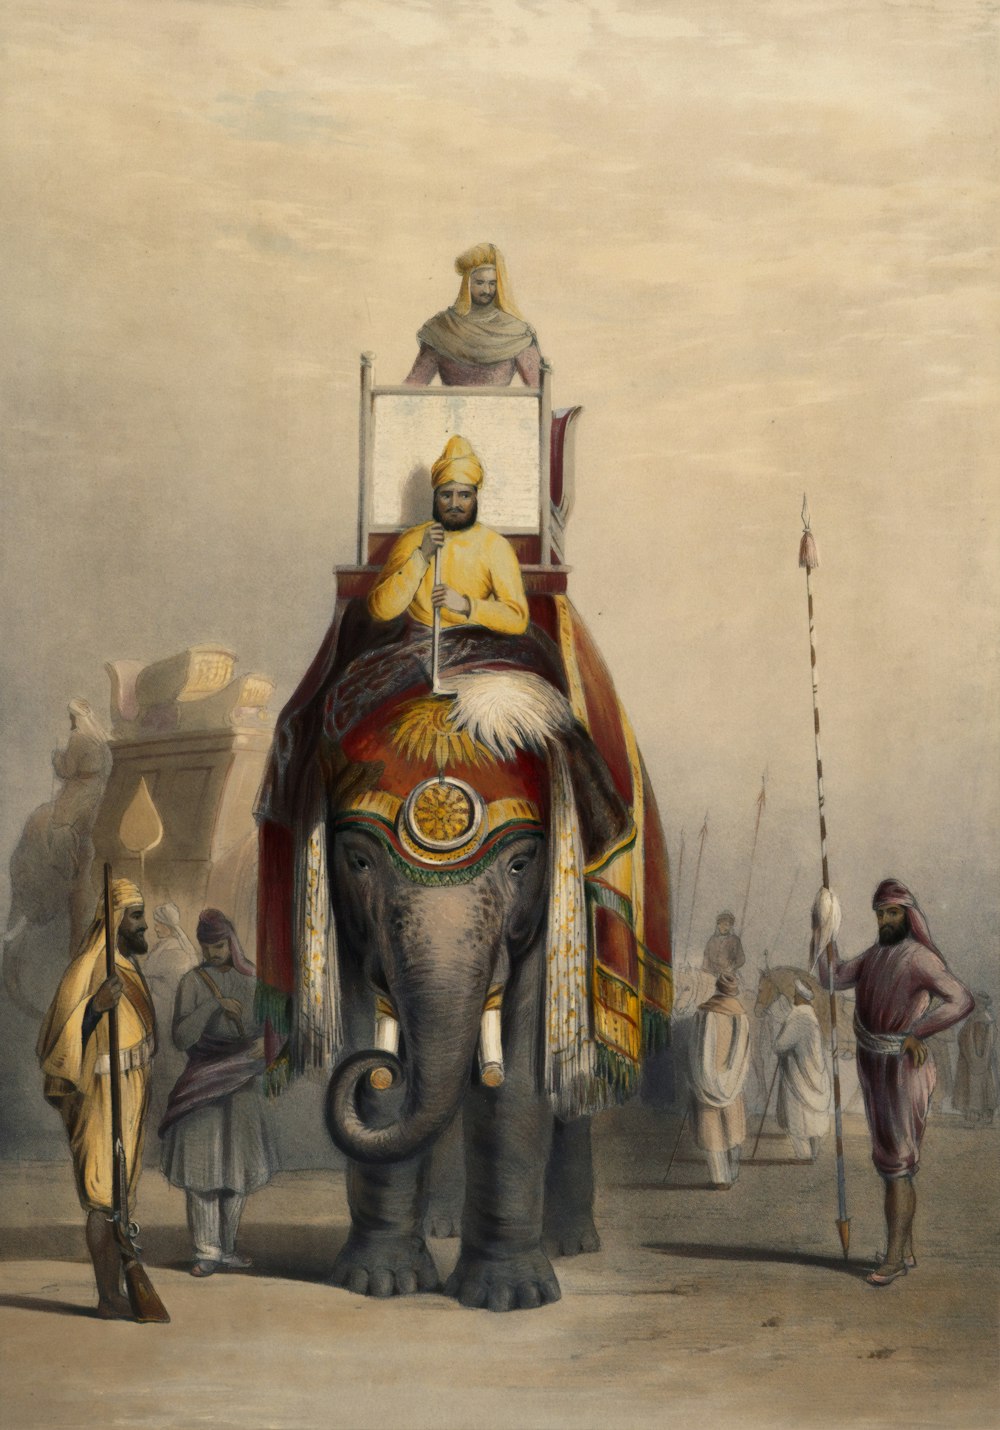 man riding elephant painting